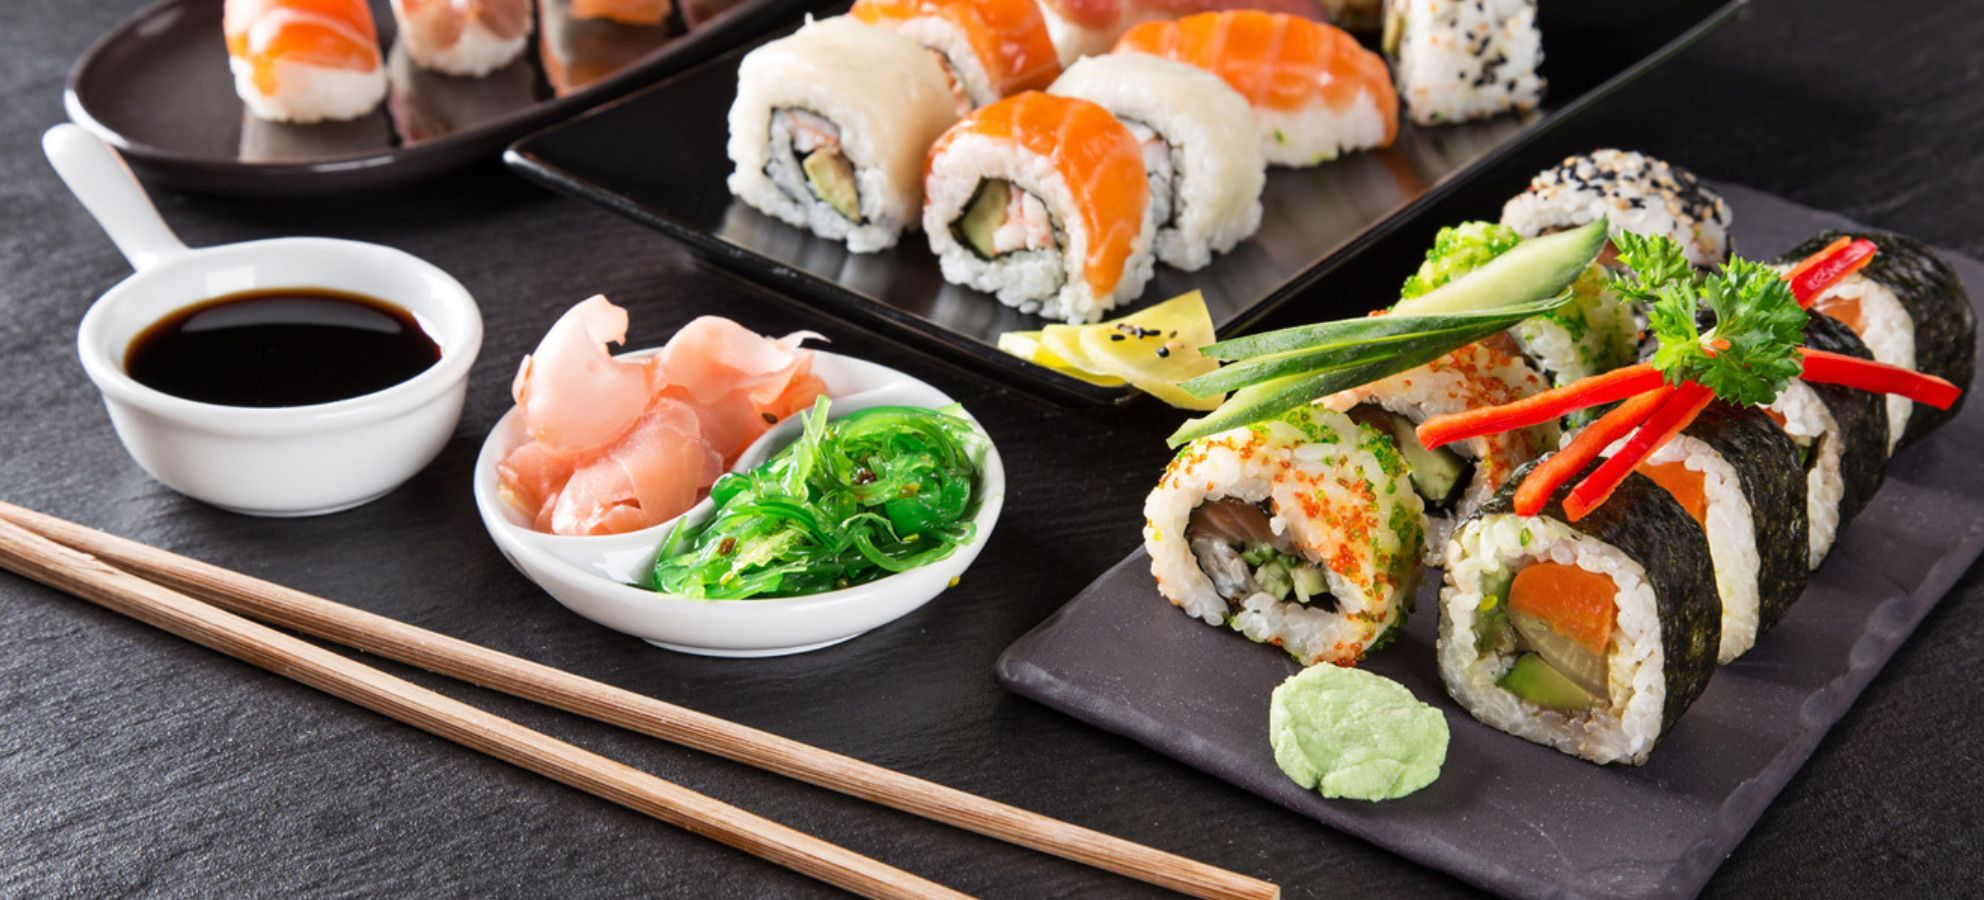 Sushi Dag